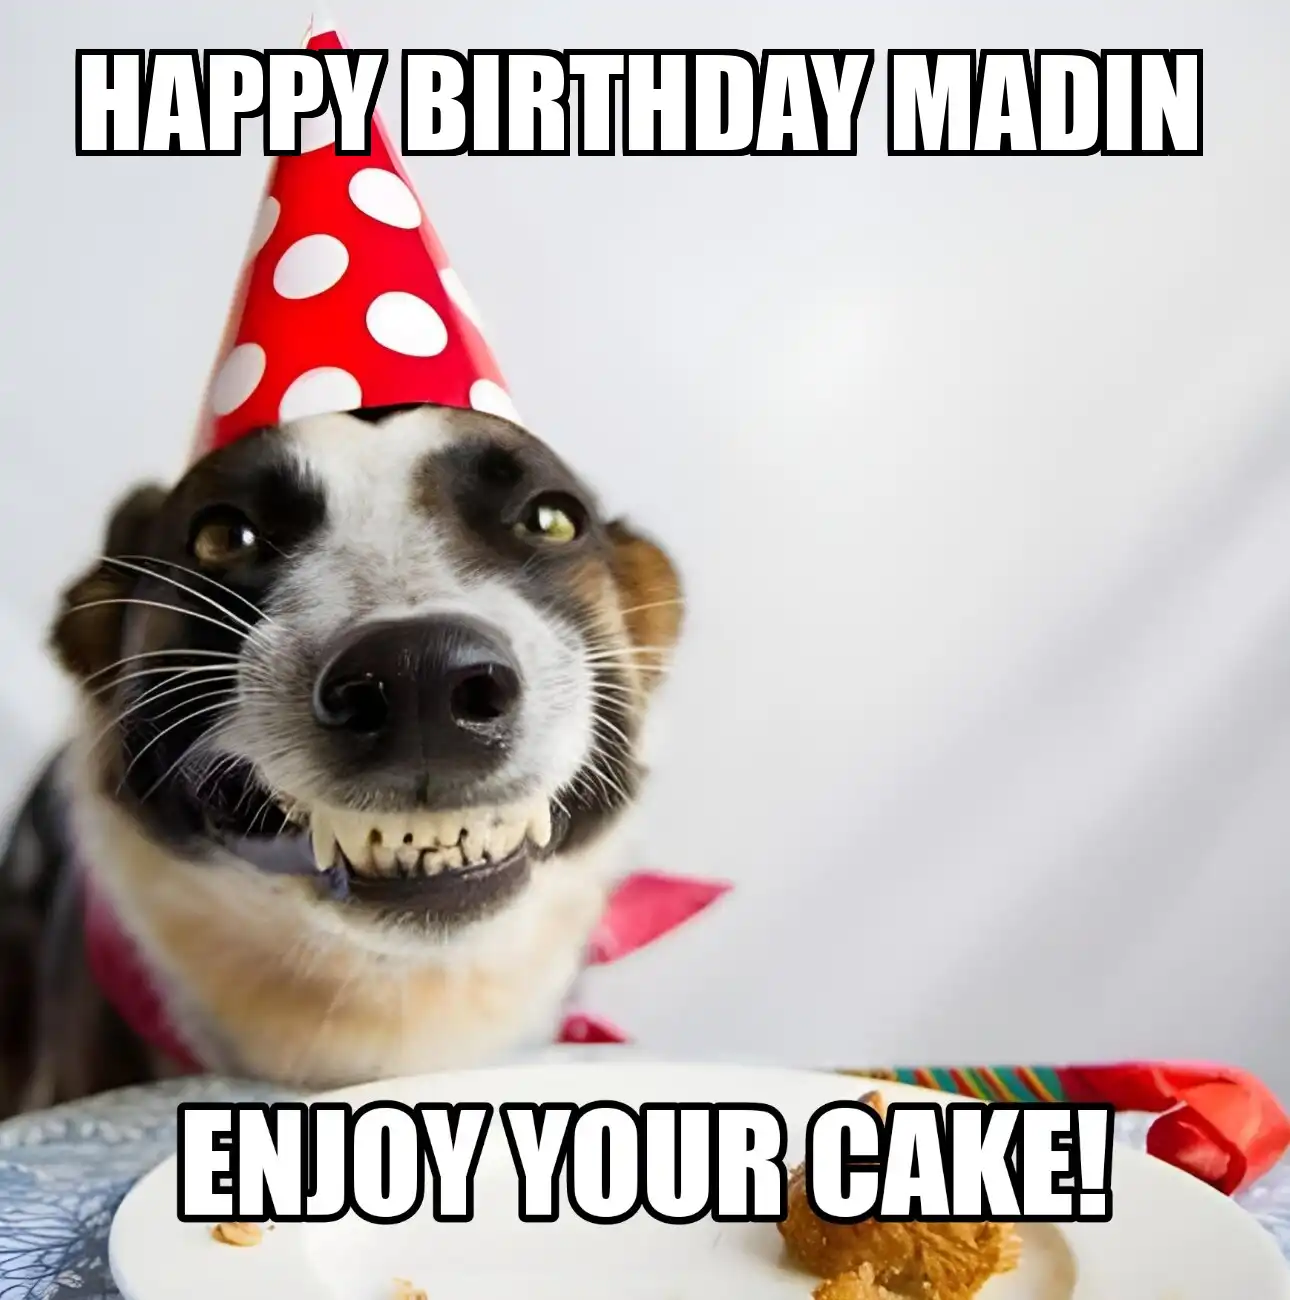 Happy Birthday Madin Enjoy Your Cake Dog Meme